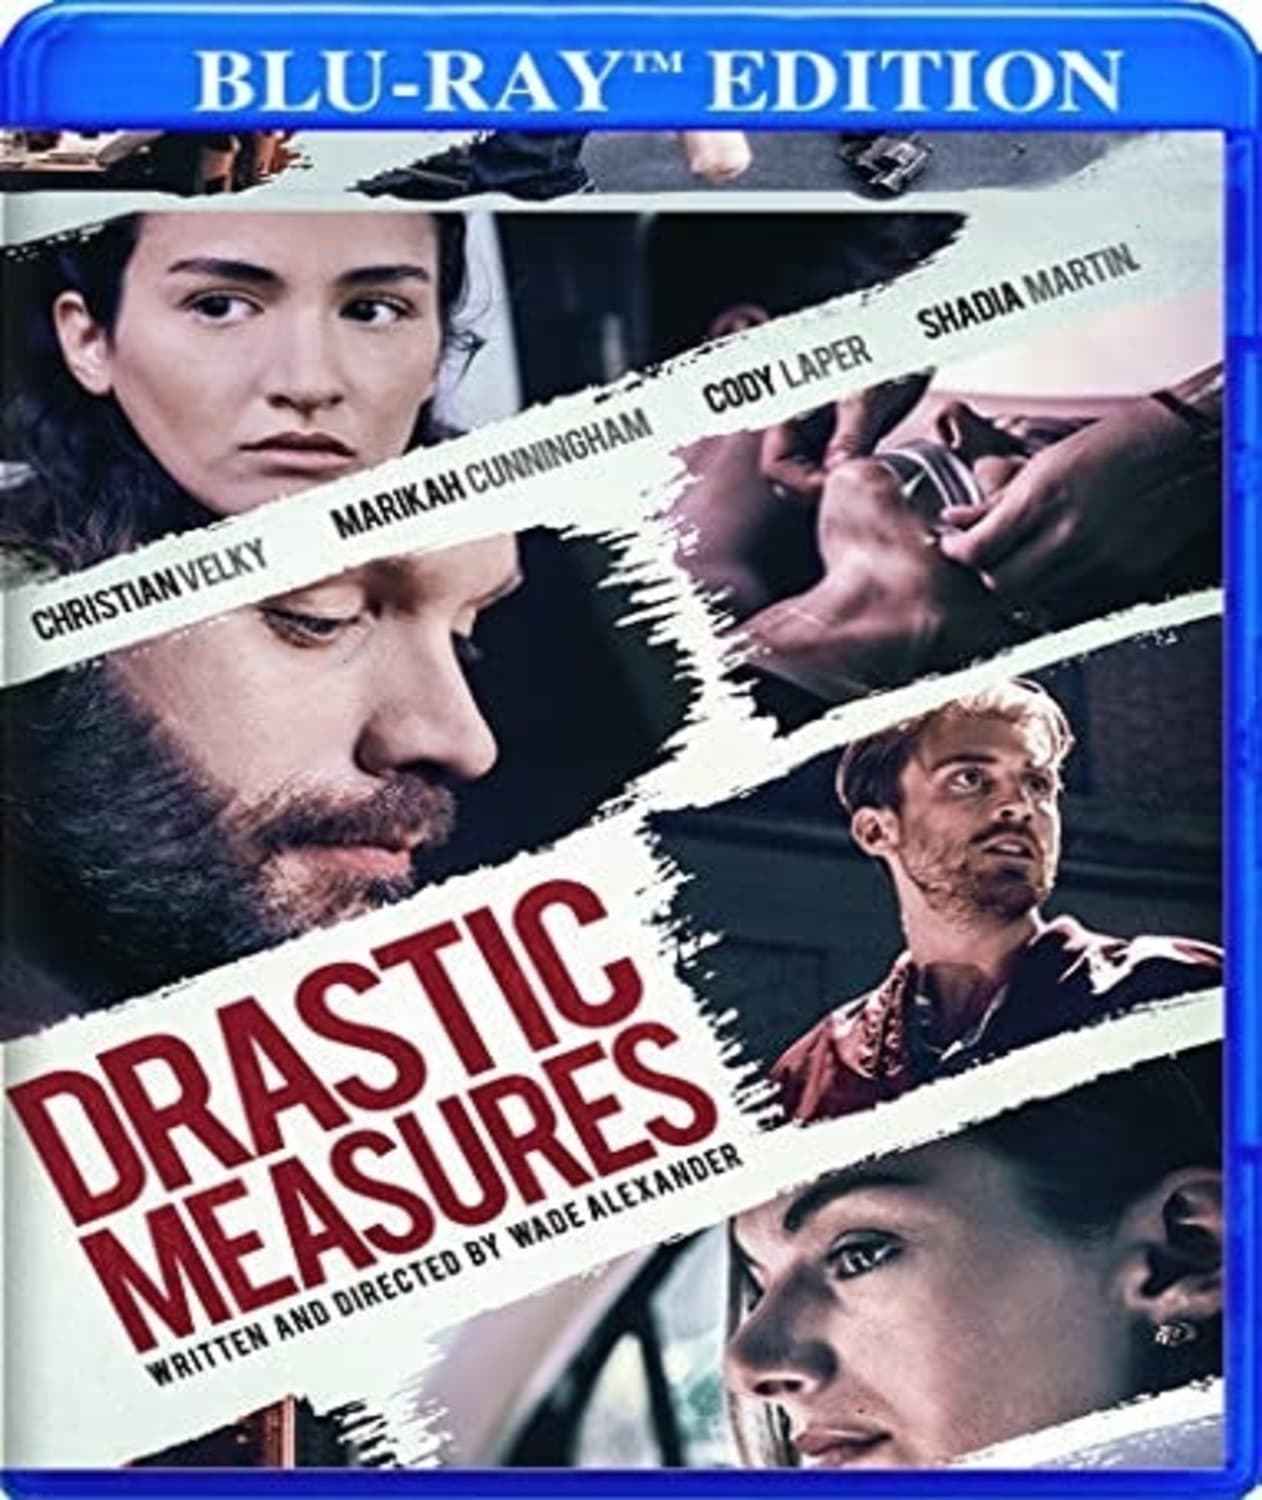 Drastic Measures (Blu-ray) on MovieShack